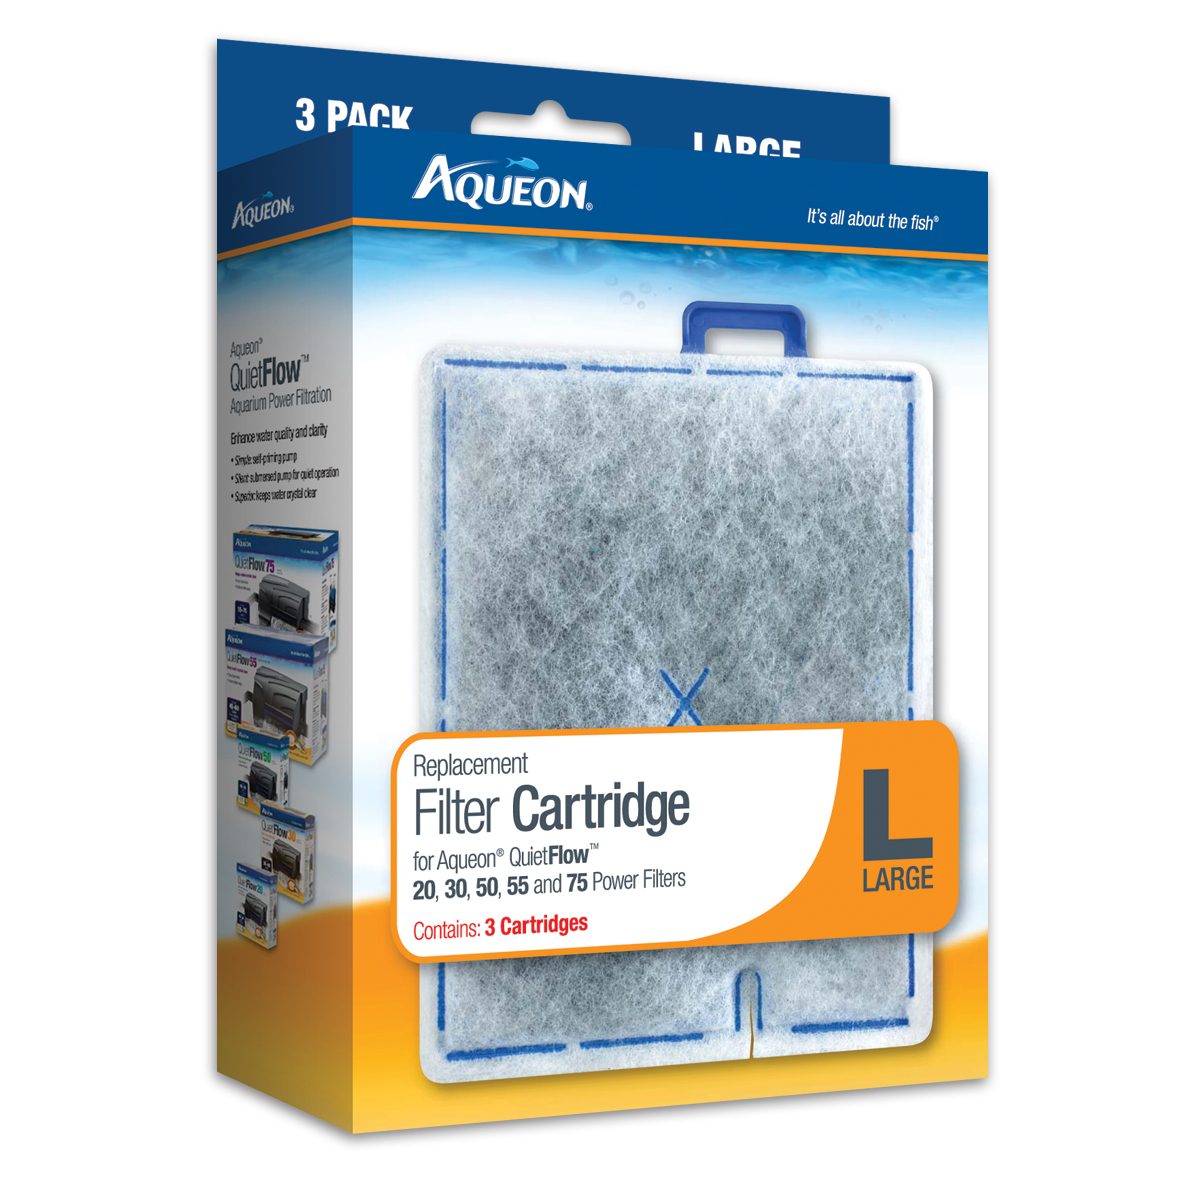 Aqueon Filter Cartridge, Large (3 Pack)